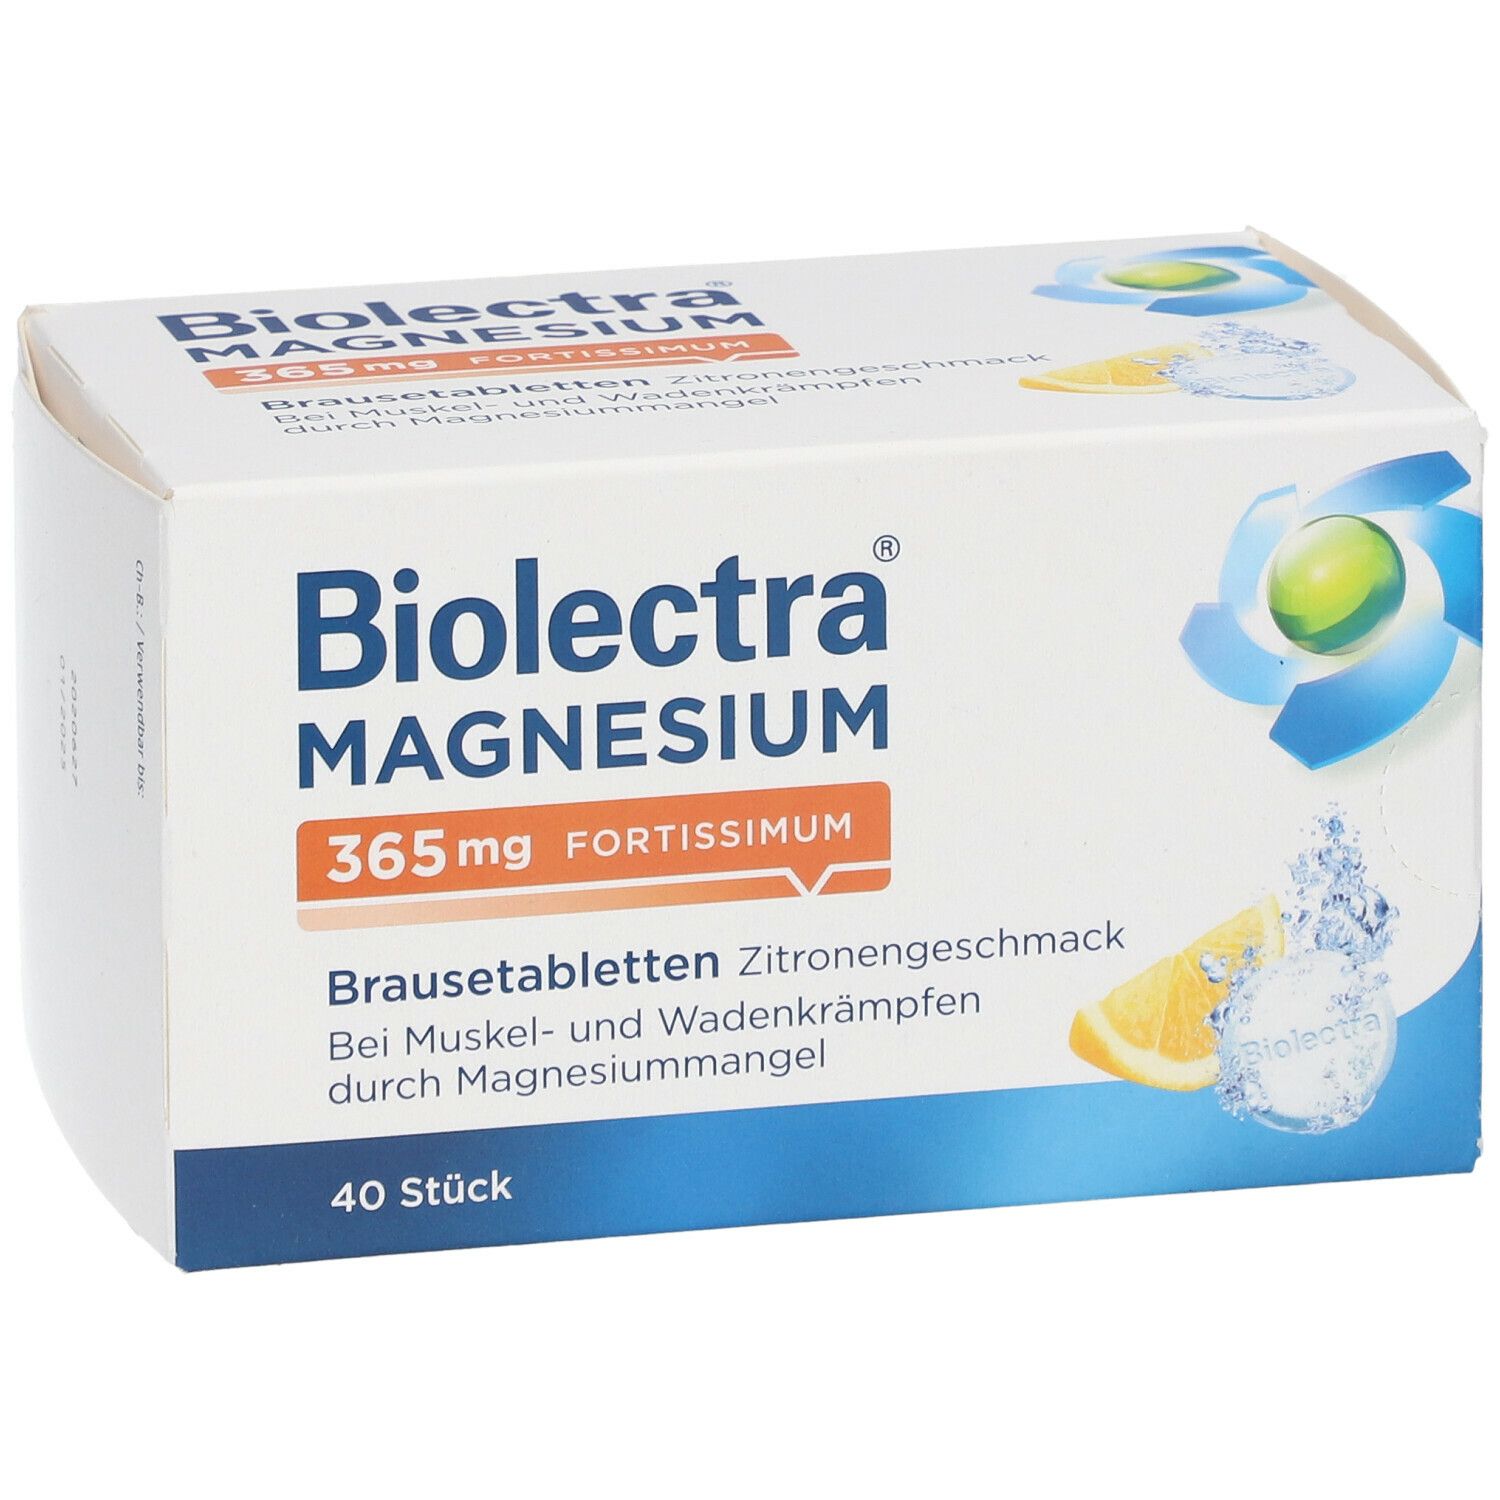 Biolectra® Magnesium 365 mg fortissimum Brausetabletten Zitrone